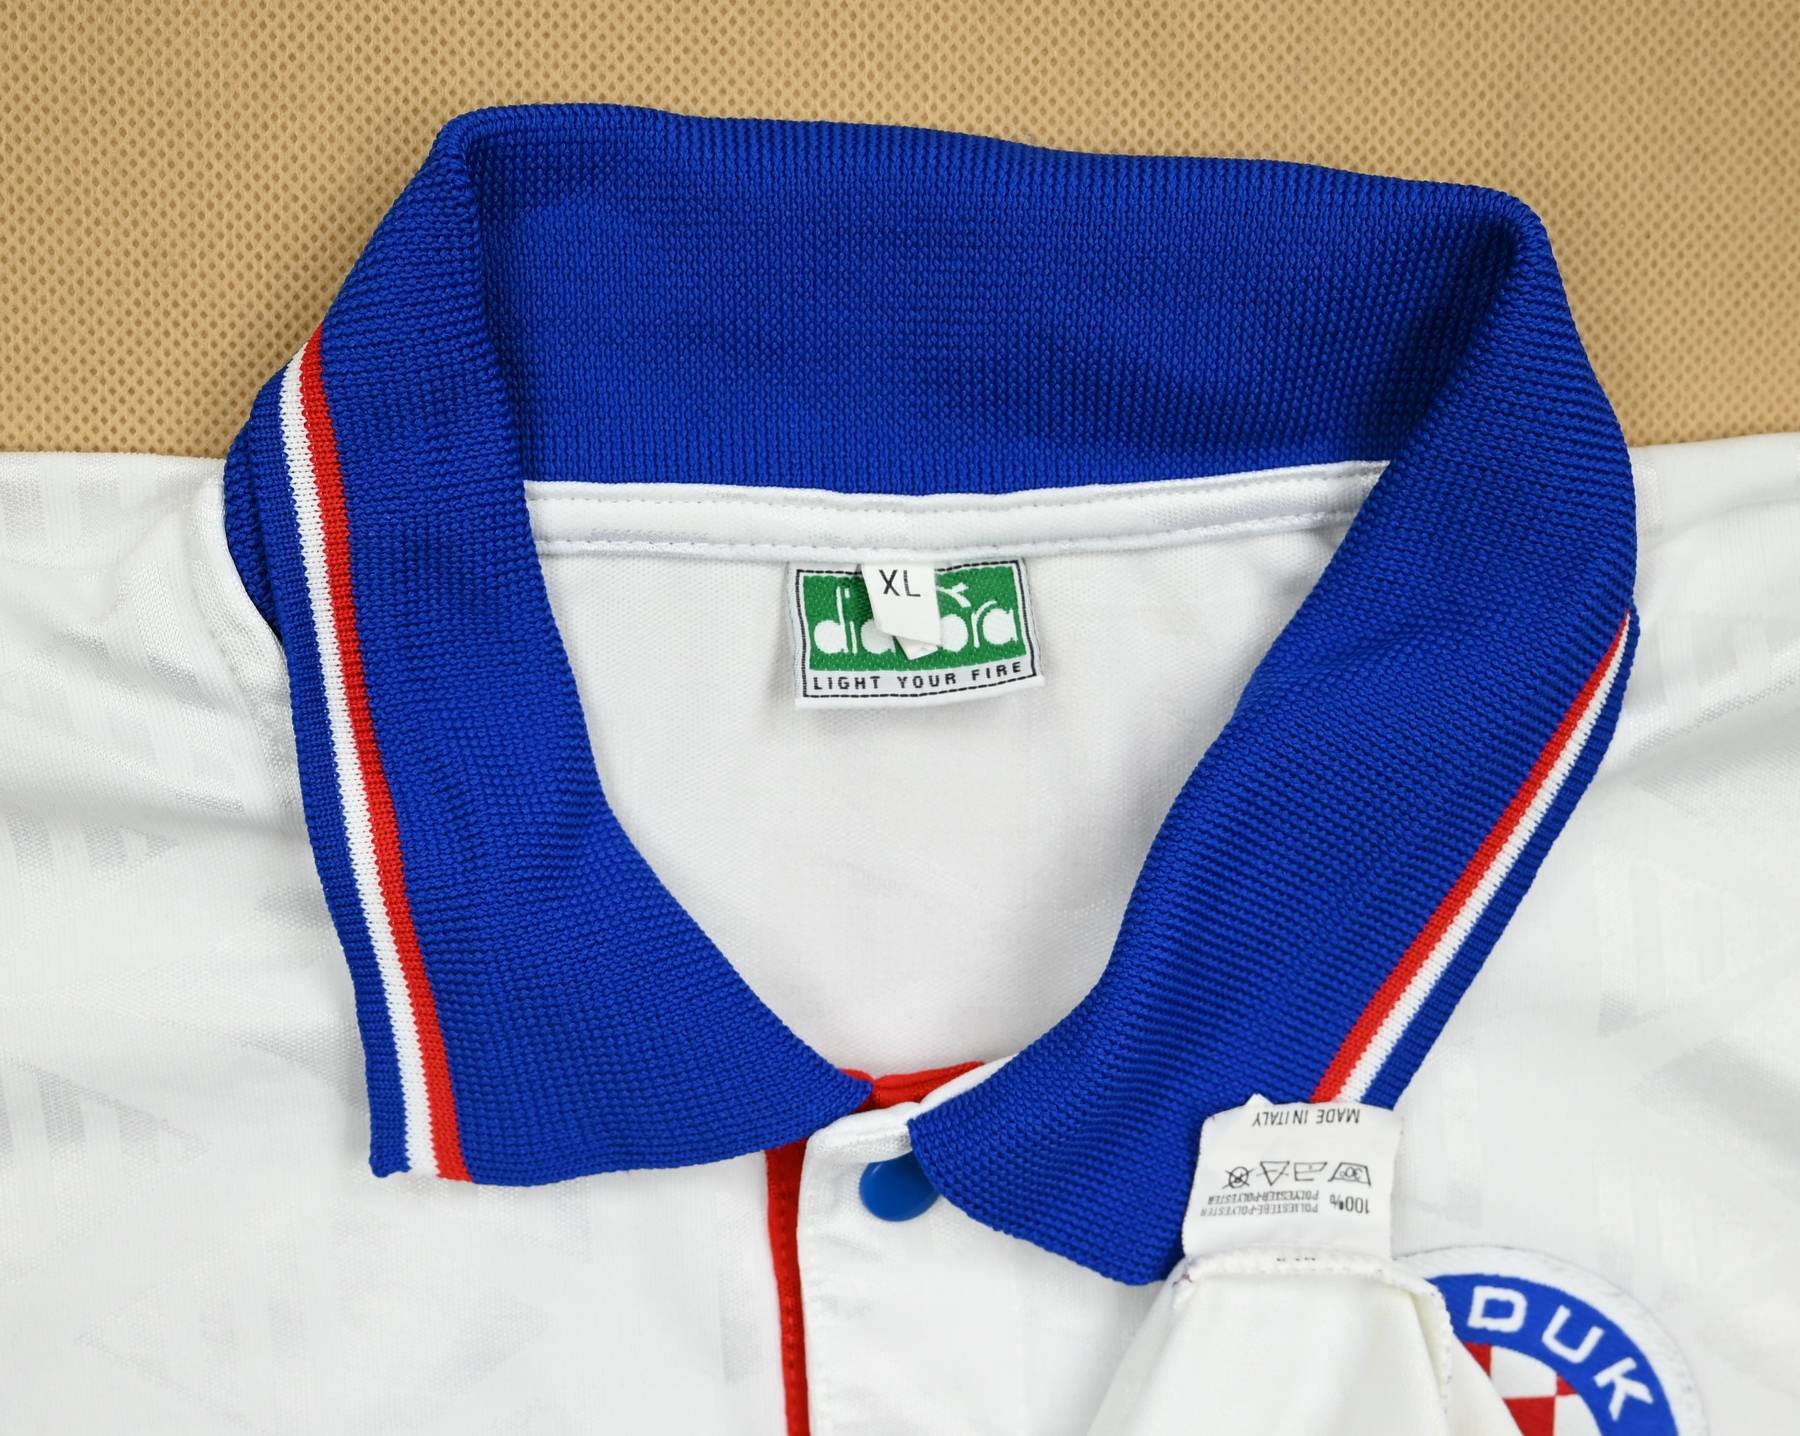 1996-98 Hajduk Split *BNWT* home jersey - XL • RB - Classic Soccer Jerseys